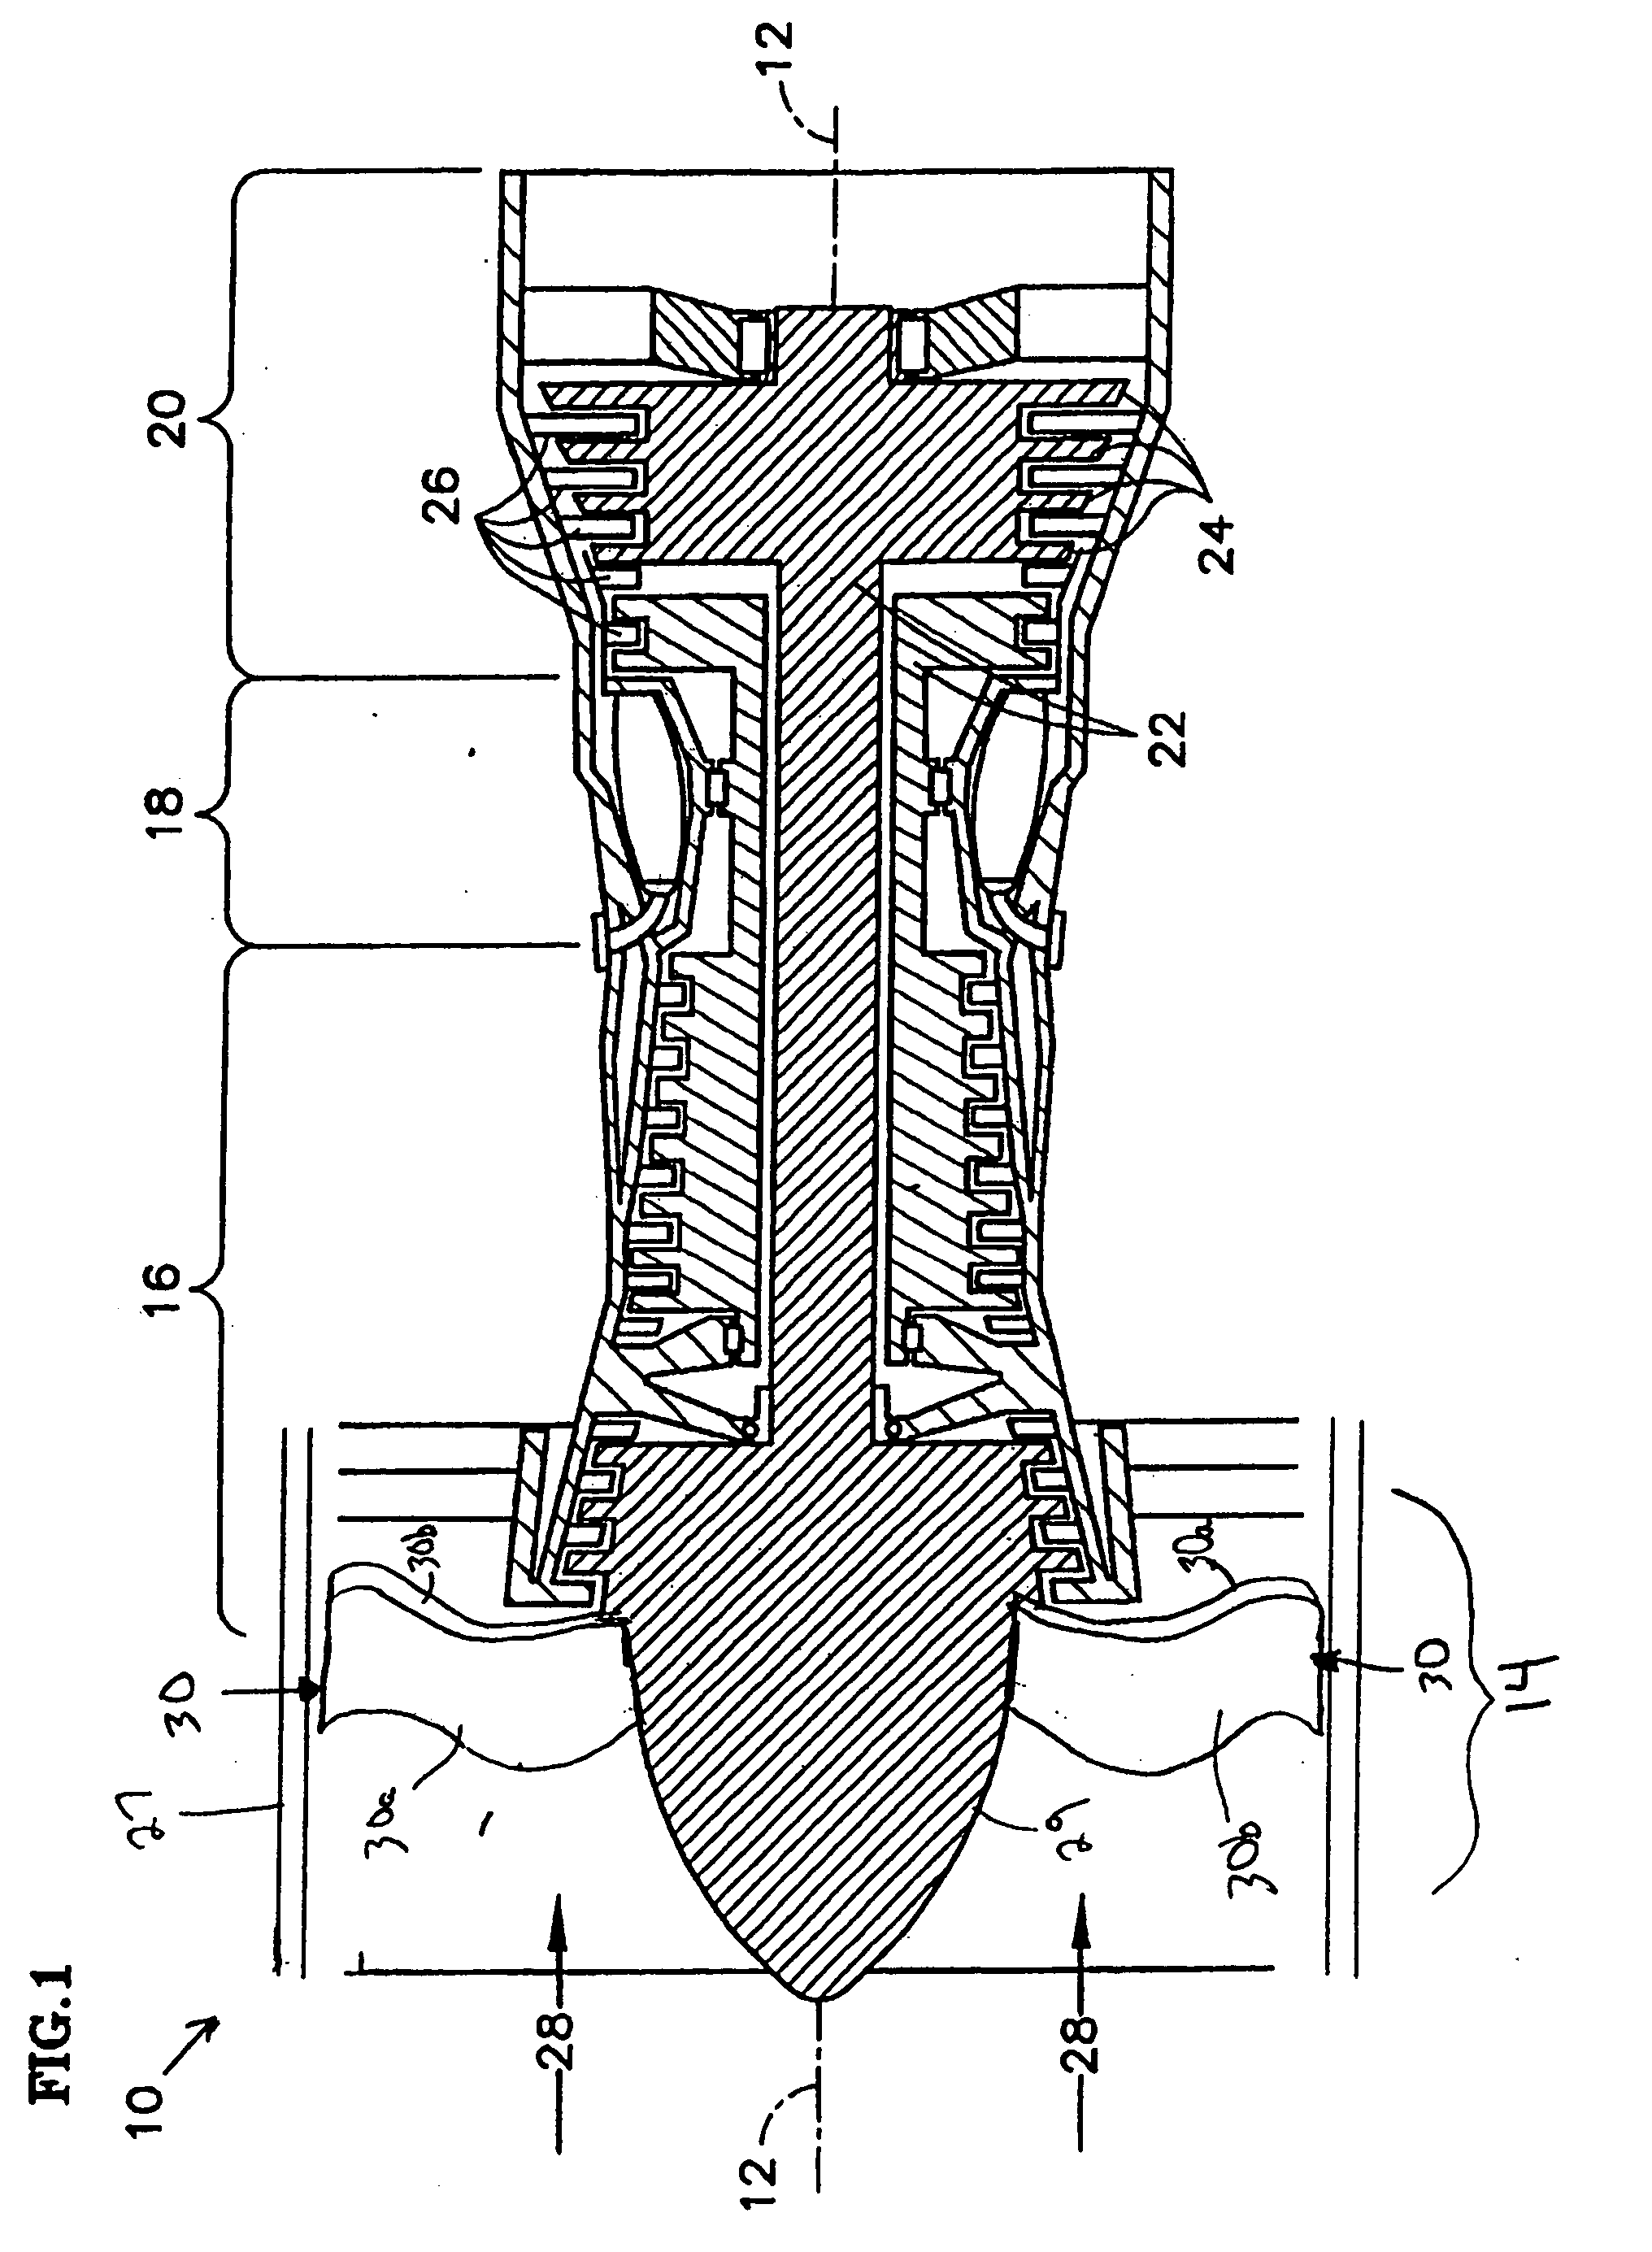 Hollow fan blade for gas turbine engine